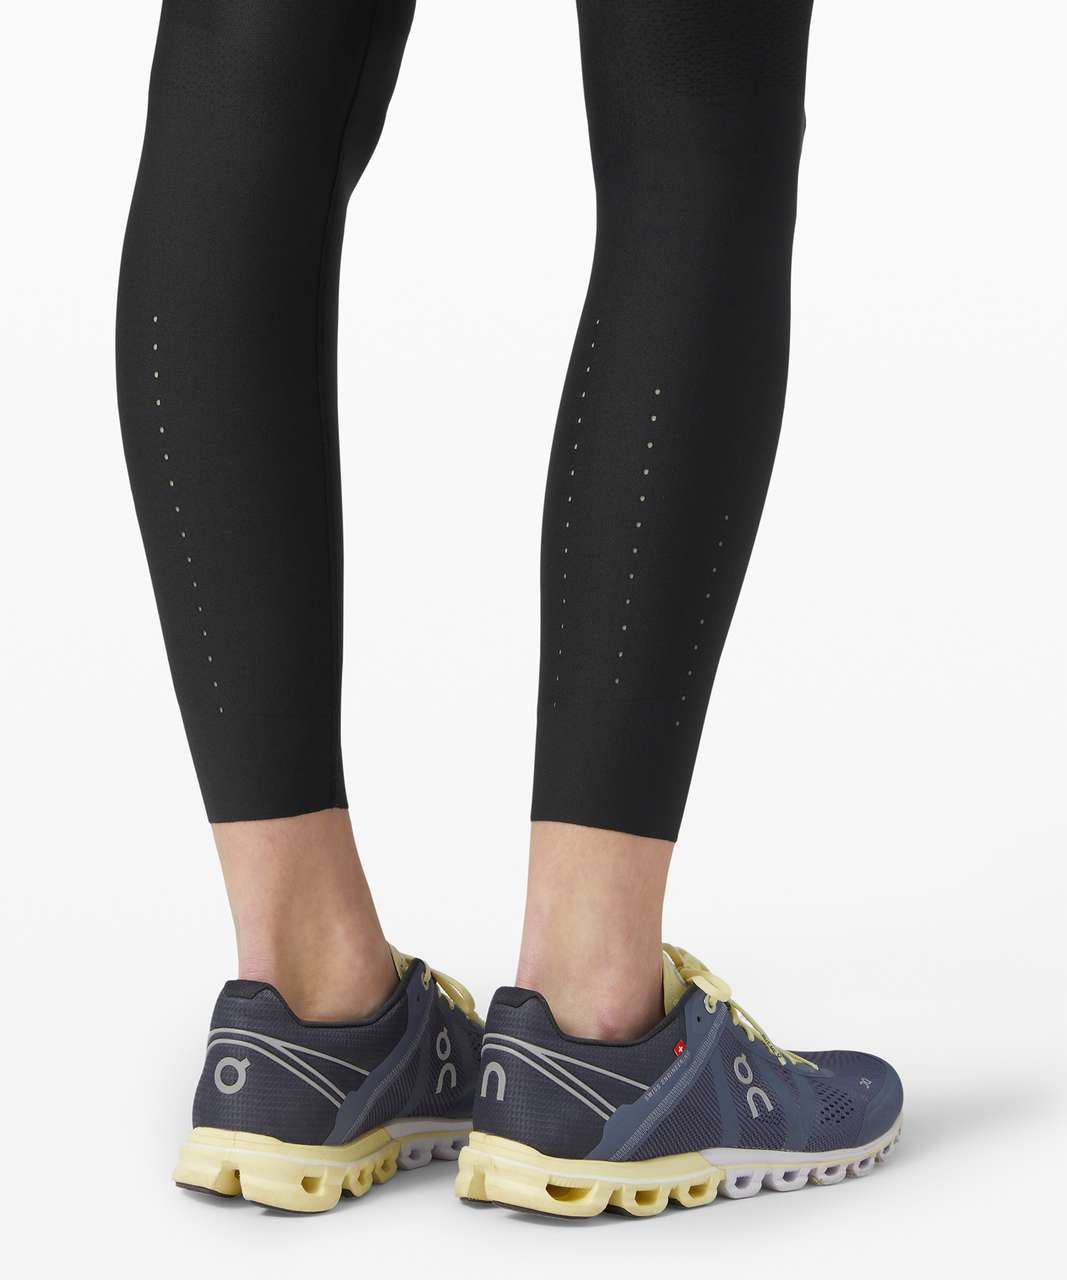 LULULEMON In Focus Run Tight Women's Leggings Black Size 2 NEW/w Tags $118